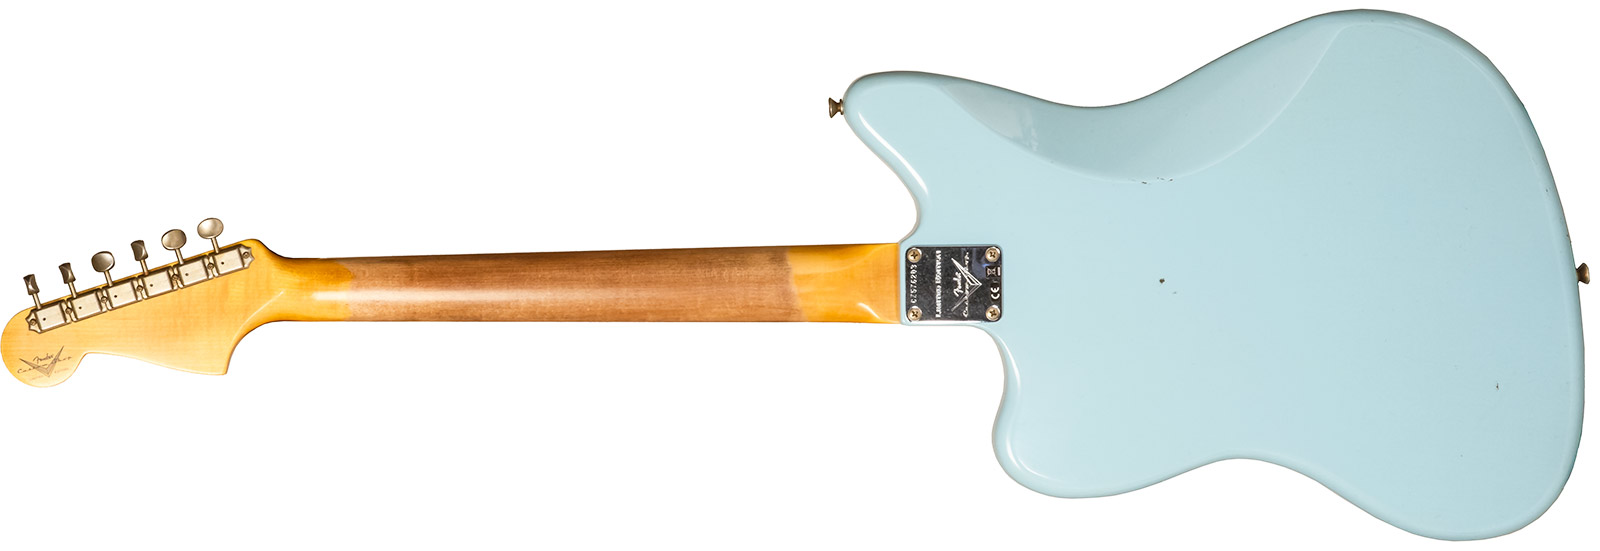 Fender Custom Shop Jazzmaster 1959 250k 2s Trem Rw #cz576203 - Journeyman Relic Aged Daphne Blue - Retro rock electric guitar - Variation 1